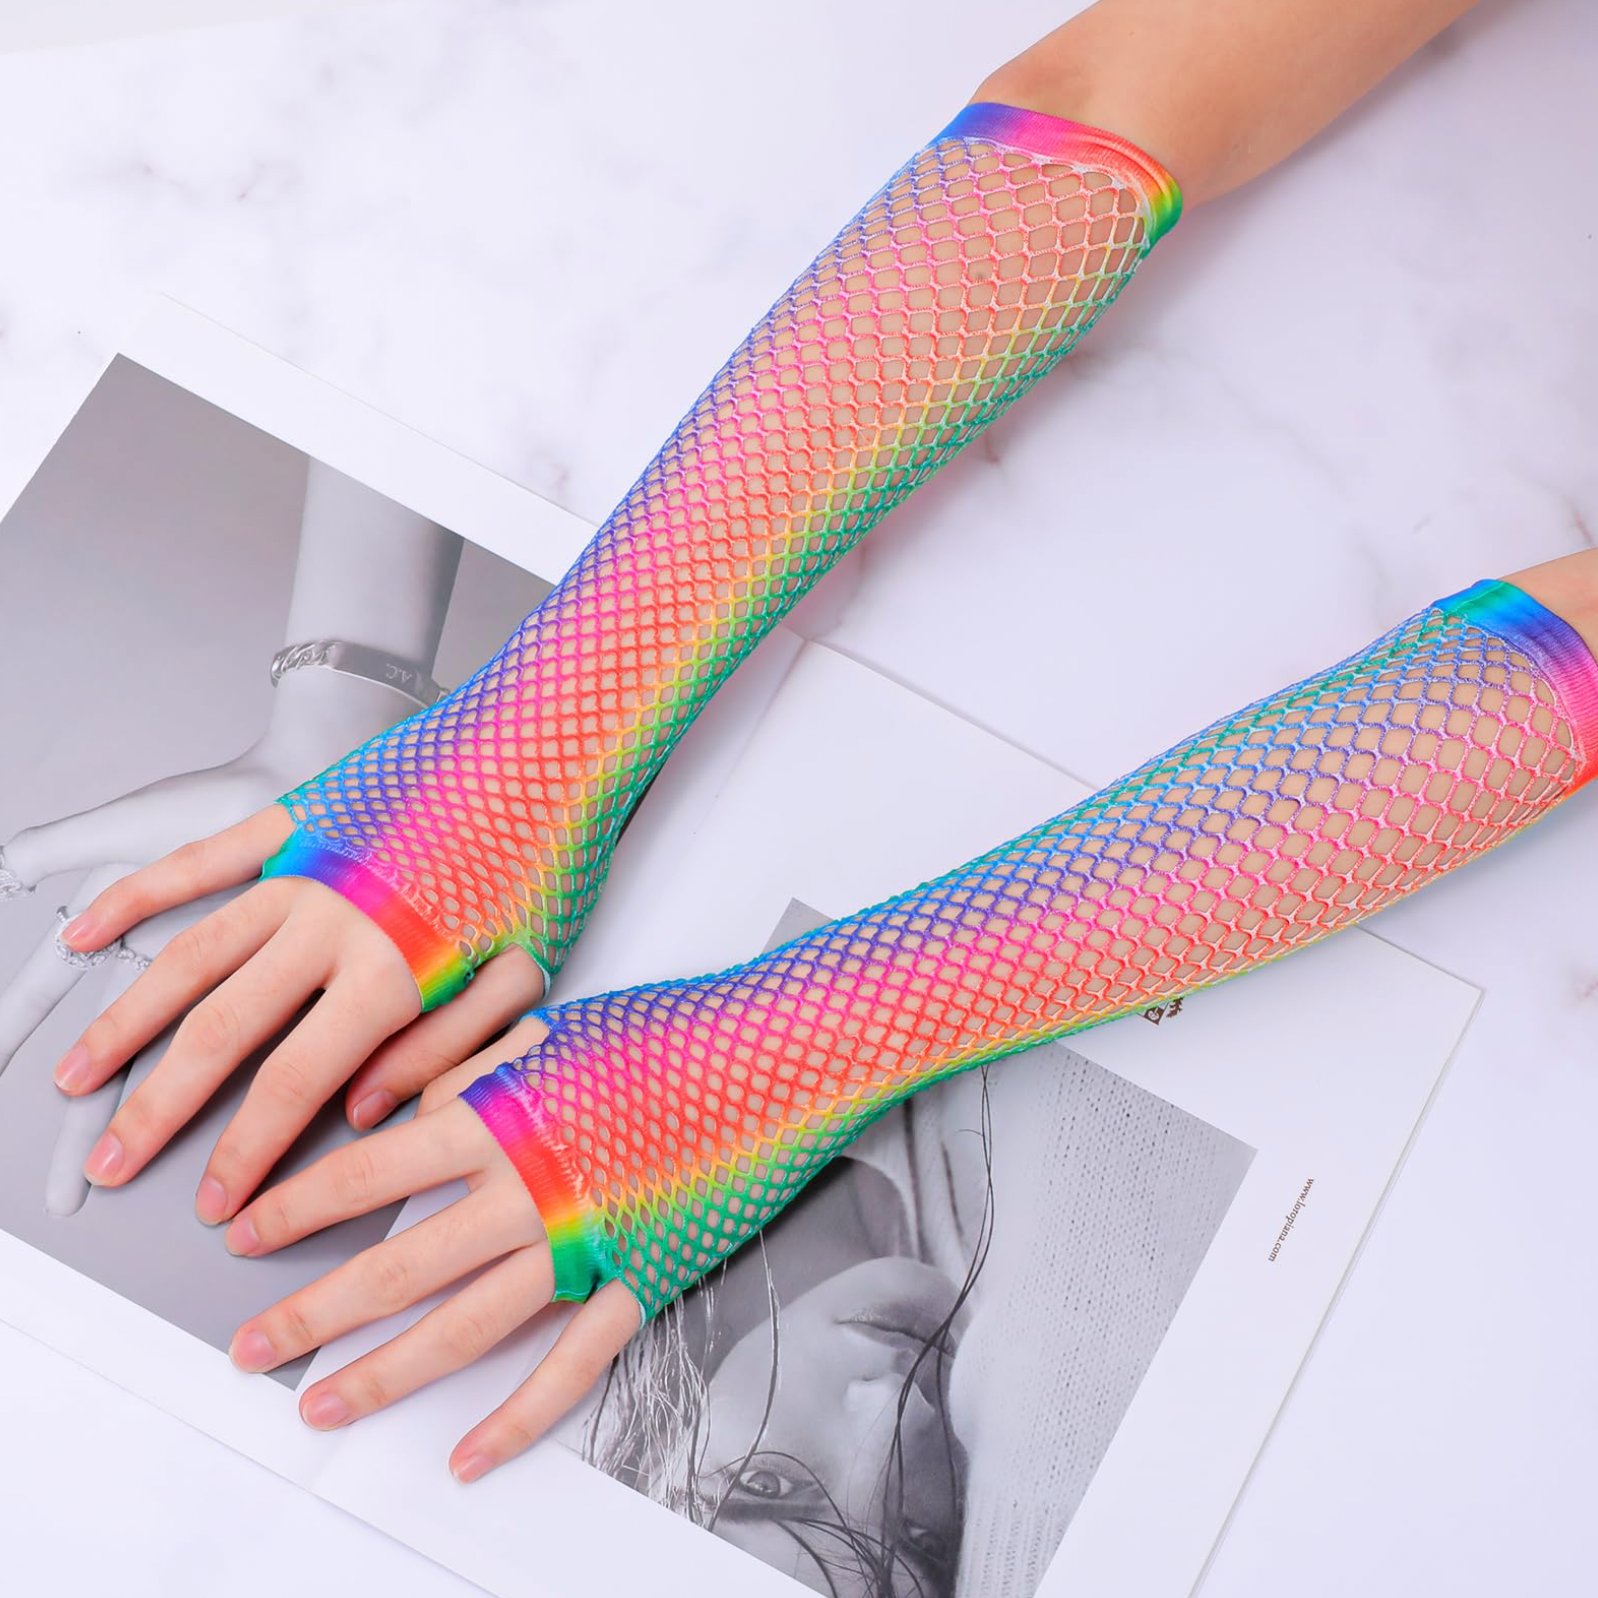 Rainbow Fishnet Gloves - Femboy Fashion